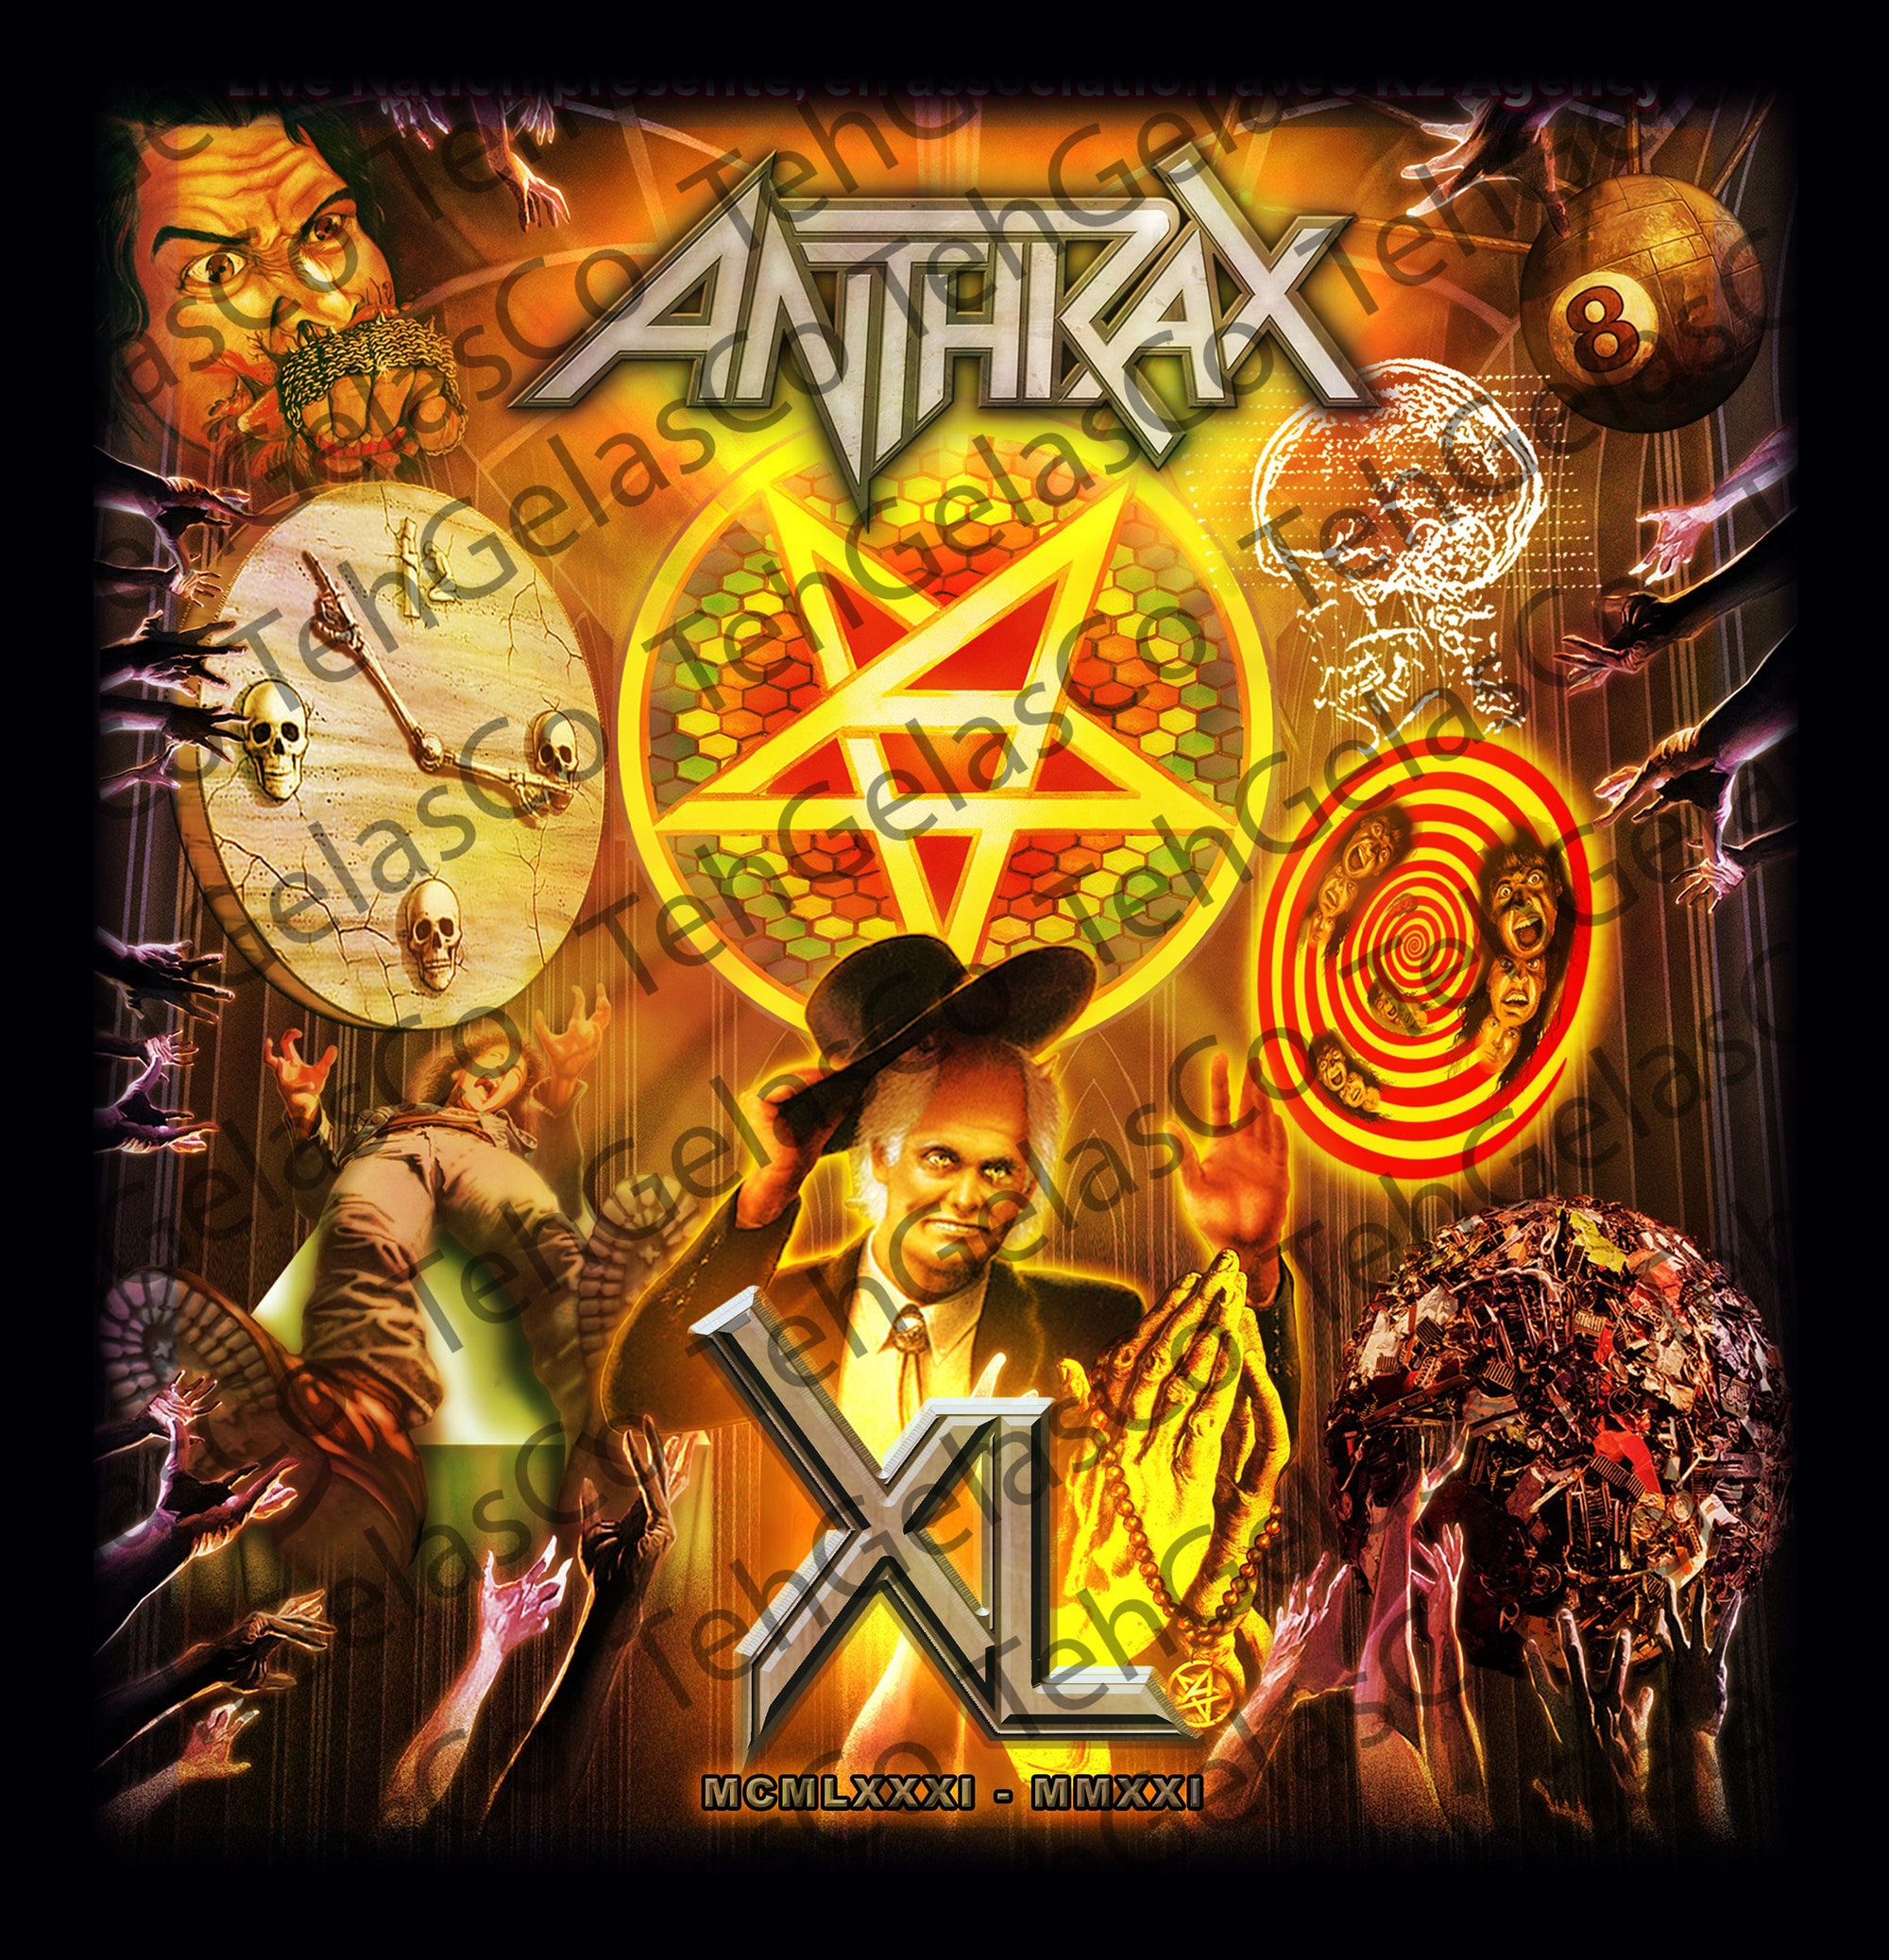 Anthrax Shirt Music North American Summer T Shirt World Tour 2022